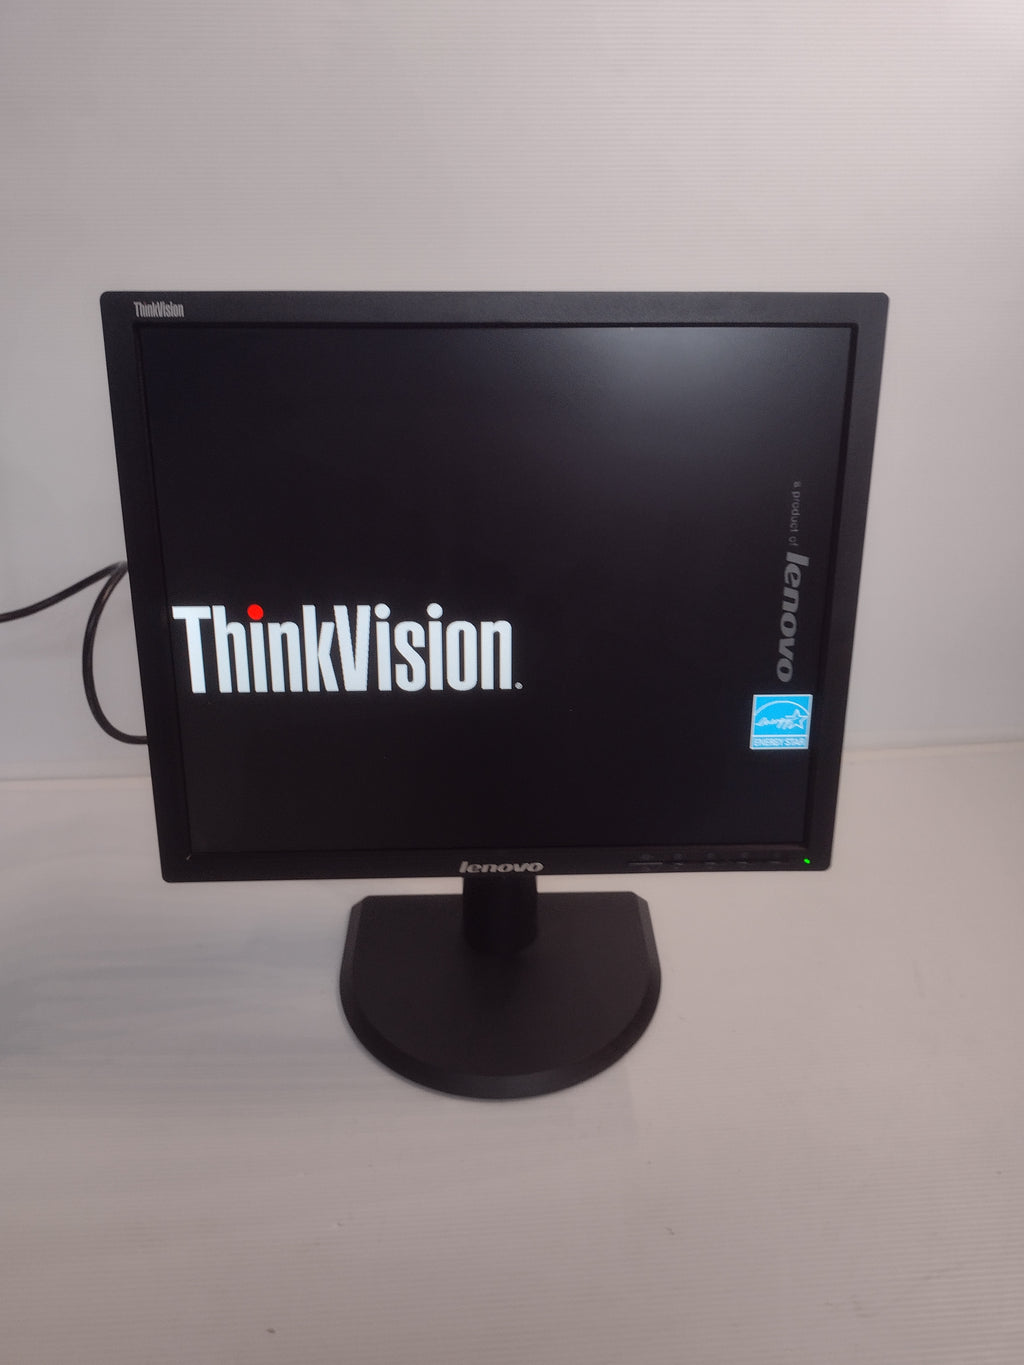 Lenovo ThinkVision 19" 1280 x 1024 LED Backlit IPS LCD LT1913pA Monitor